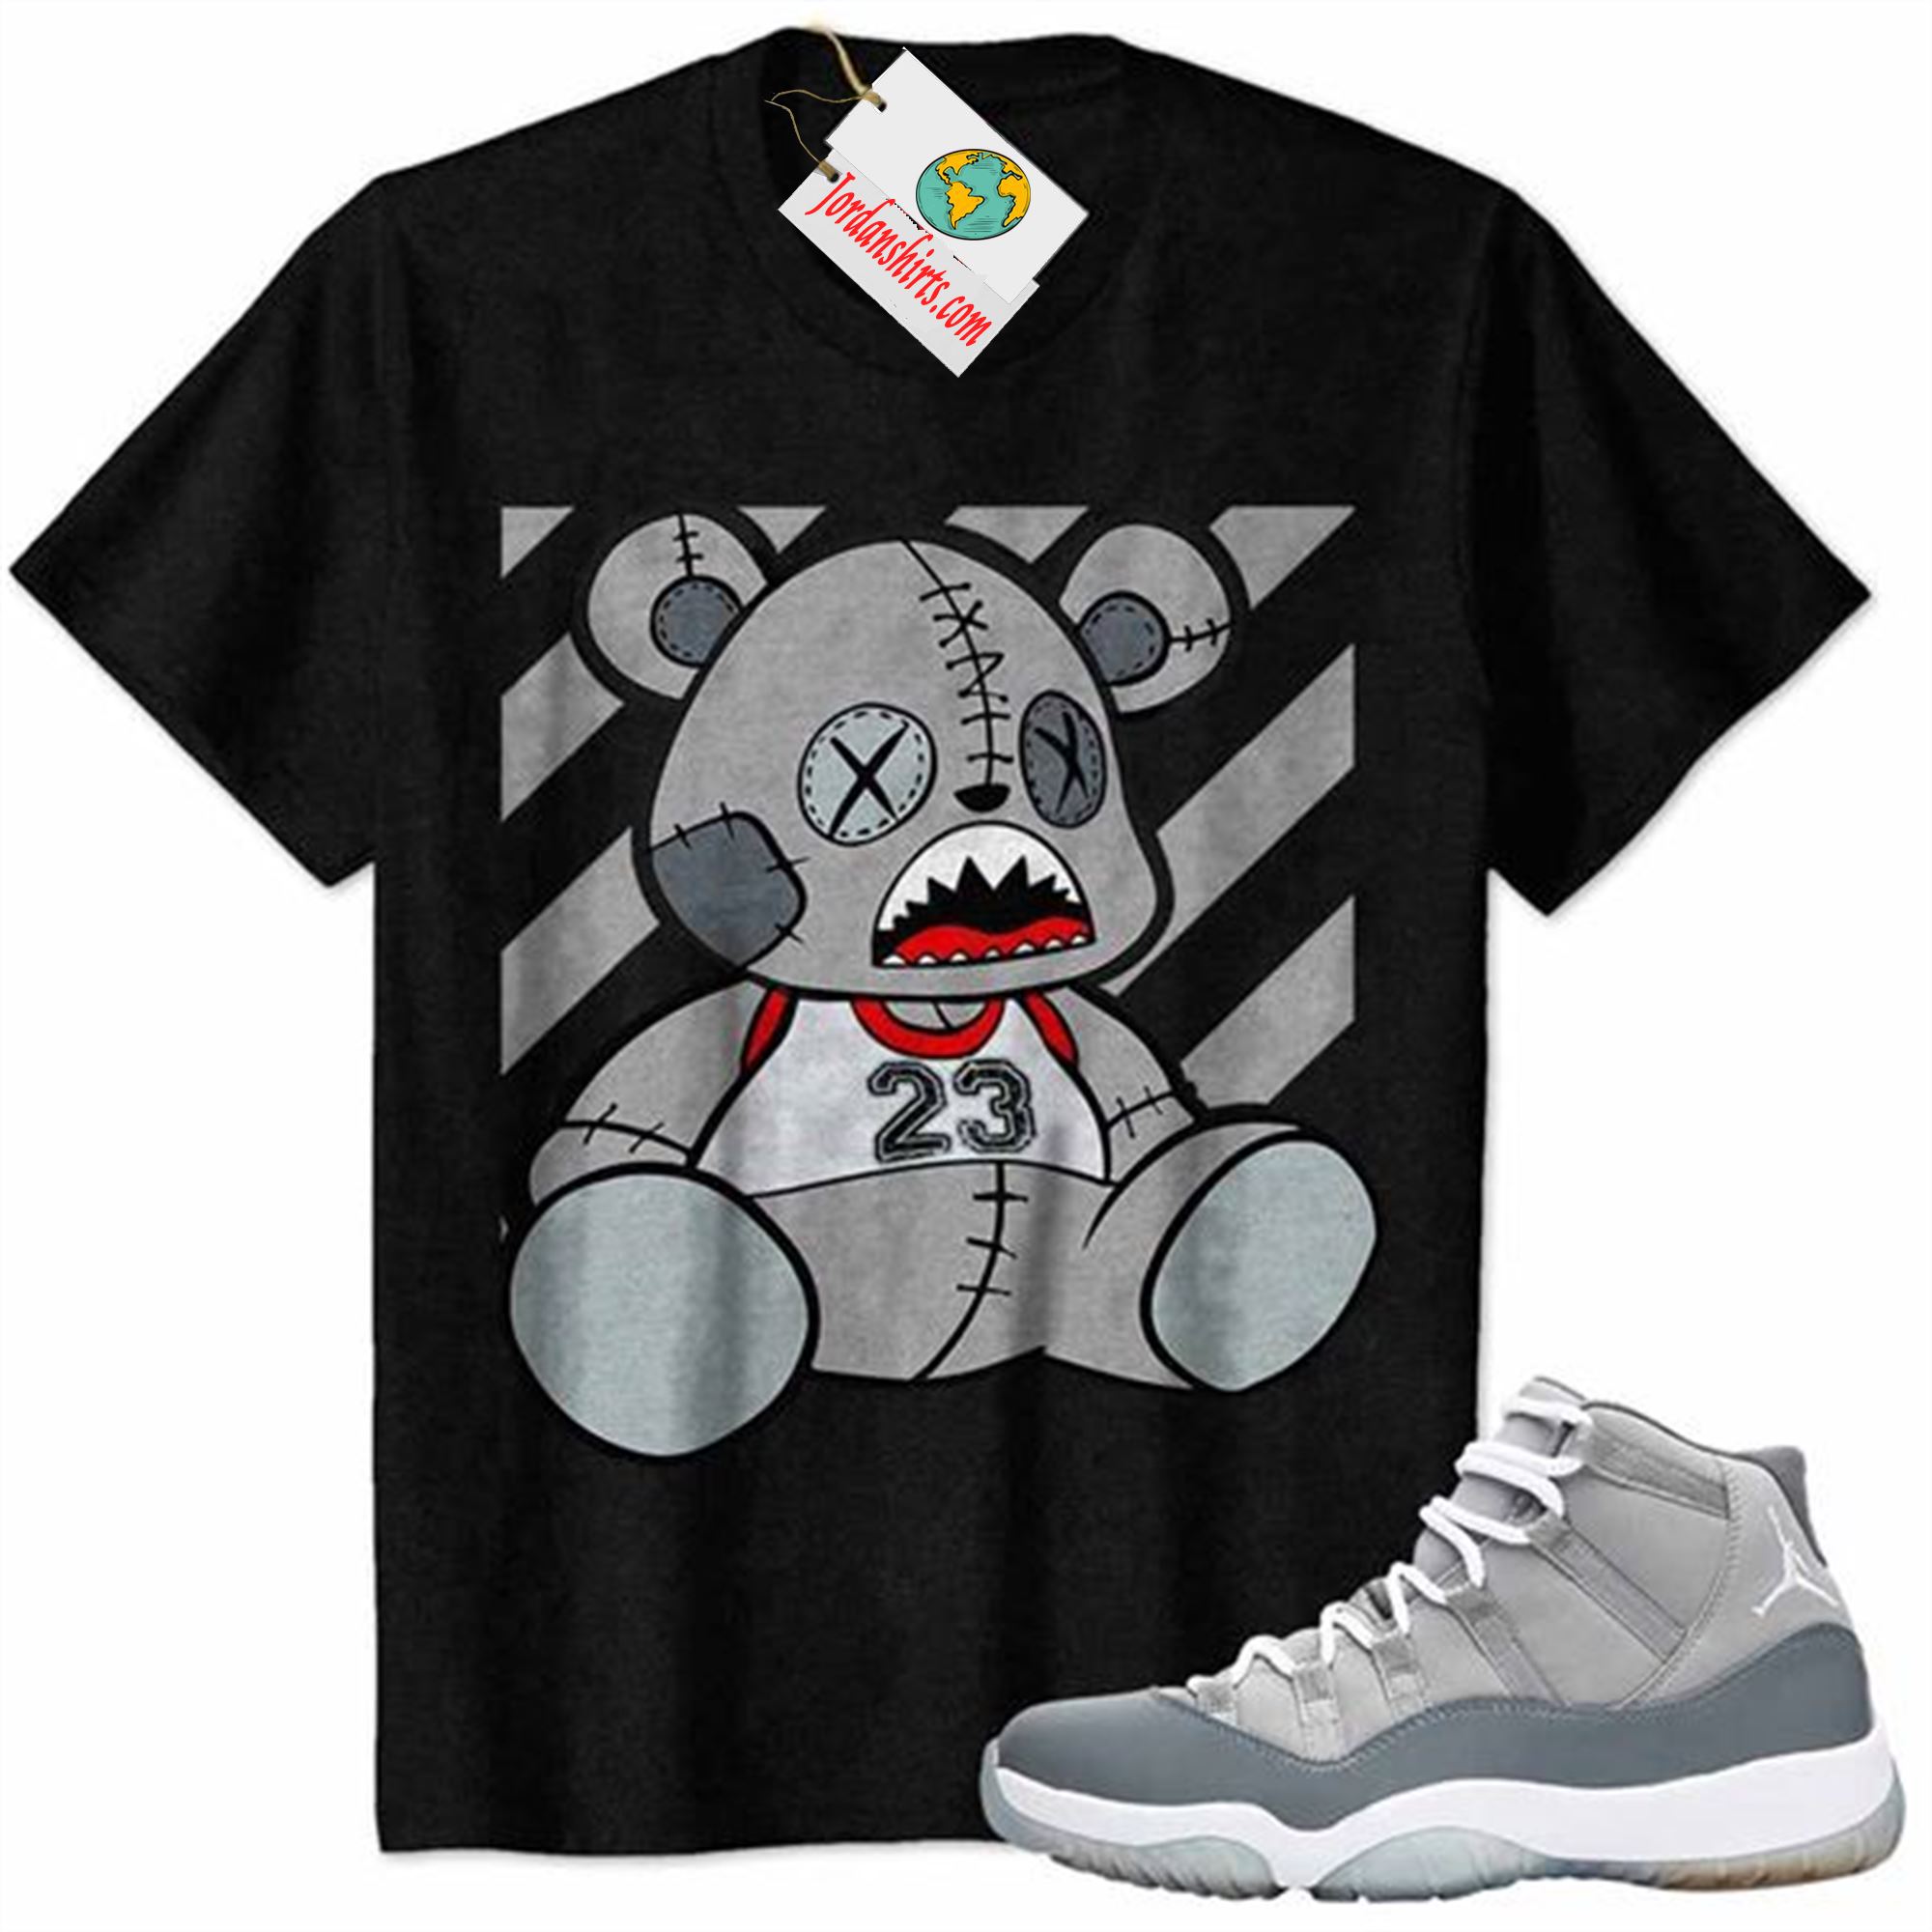 Jordan 11 Shirt, 23 Teddy Black Air Jordan 11 Cool Grey 11s Full Size Up To 5xl